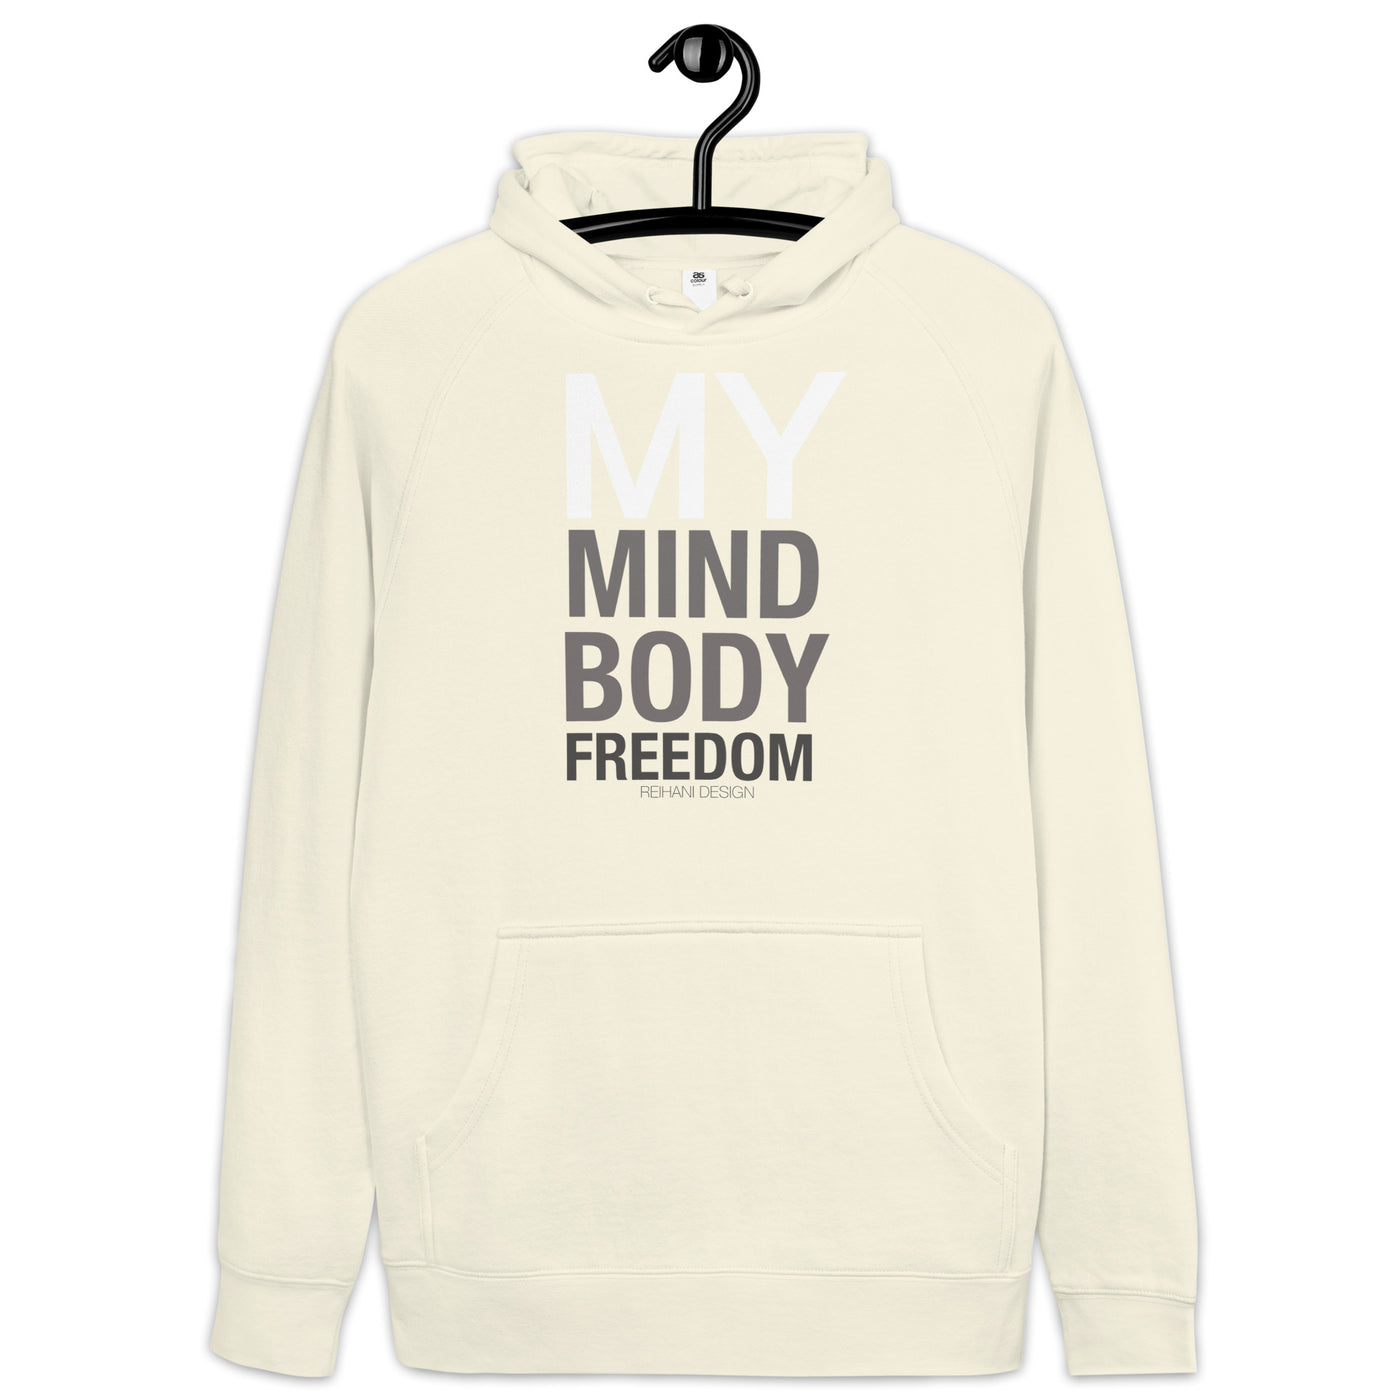 Unisex kangaroo pocket hoodie with "MY BODY MIND FREEDOM" imprint